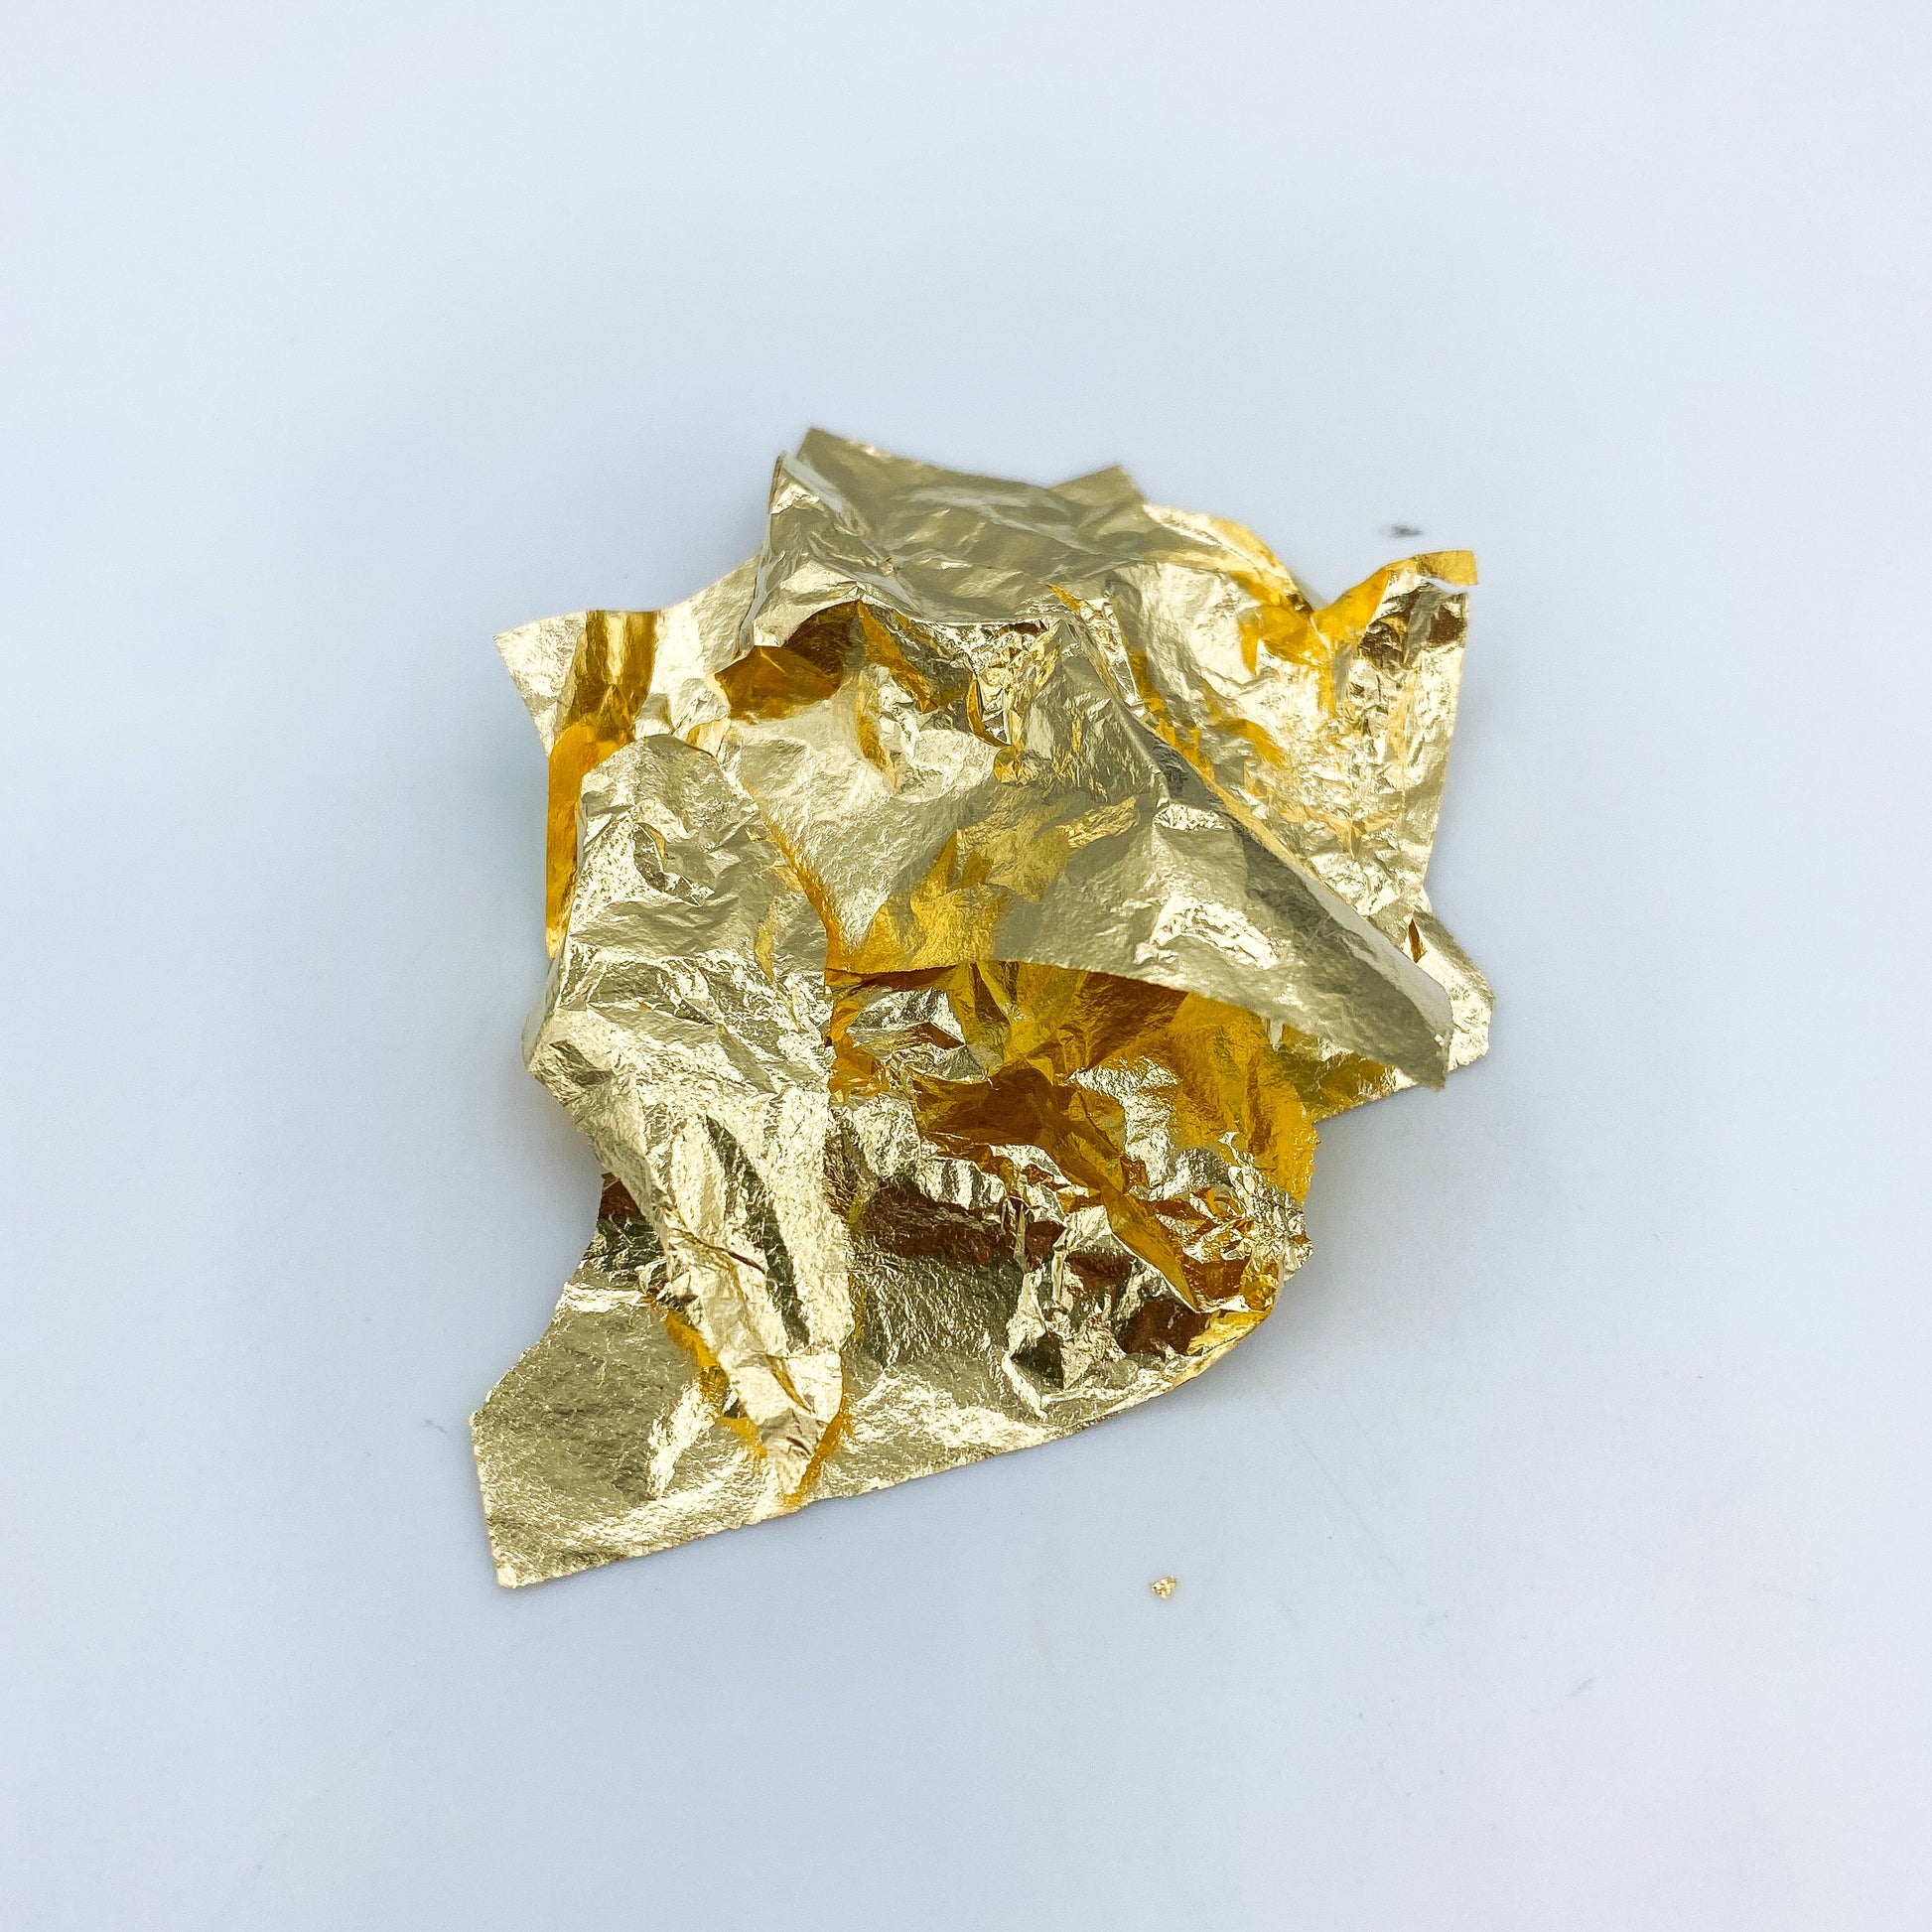 pyrite vs gold flakes